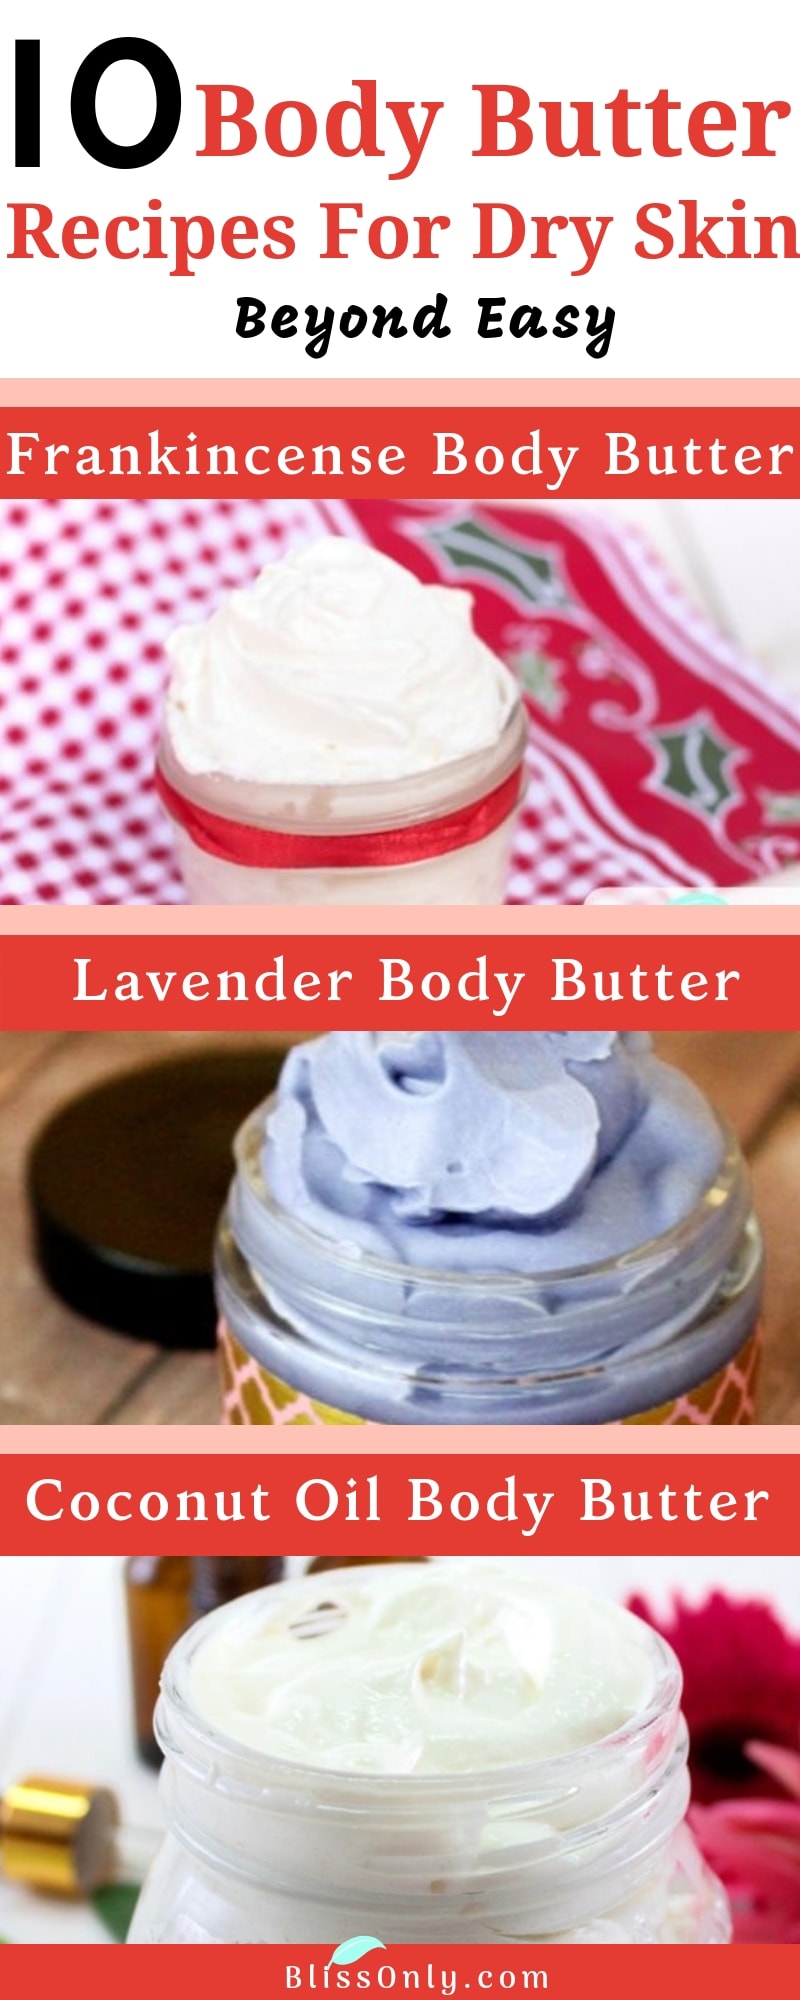 body butter for dry skin